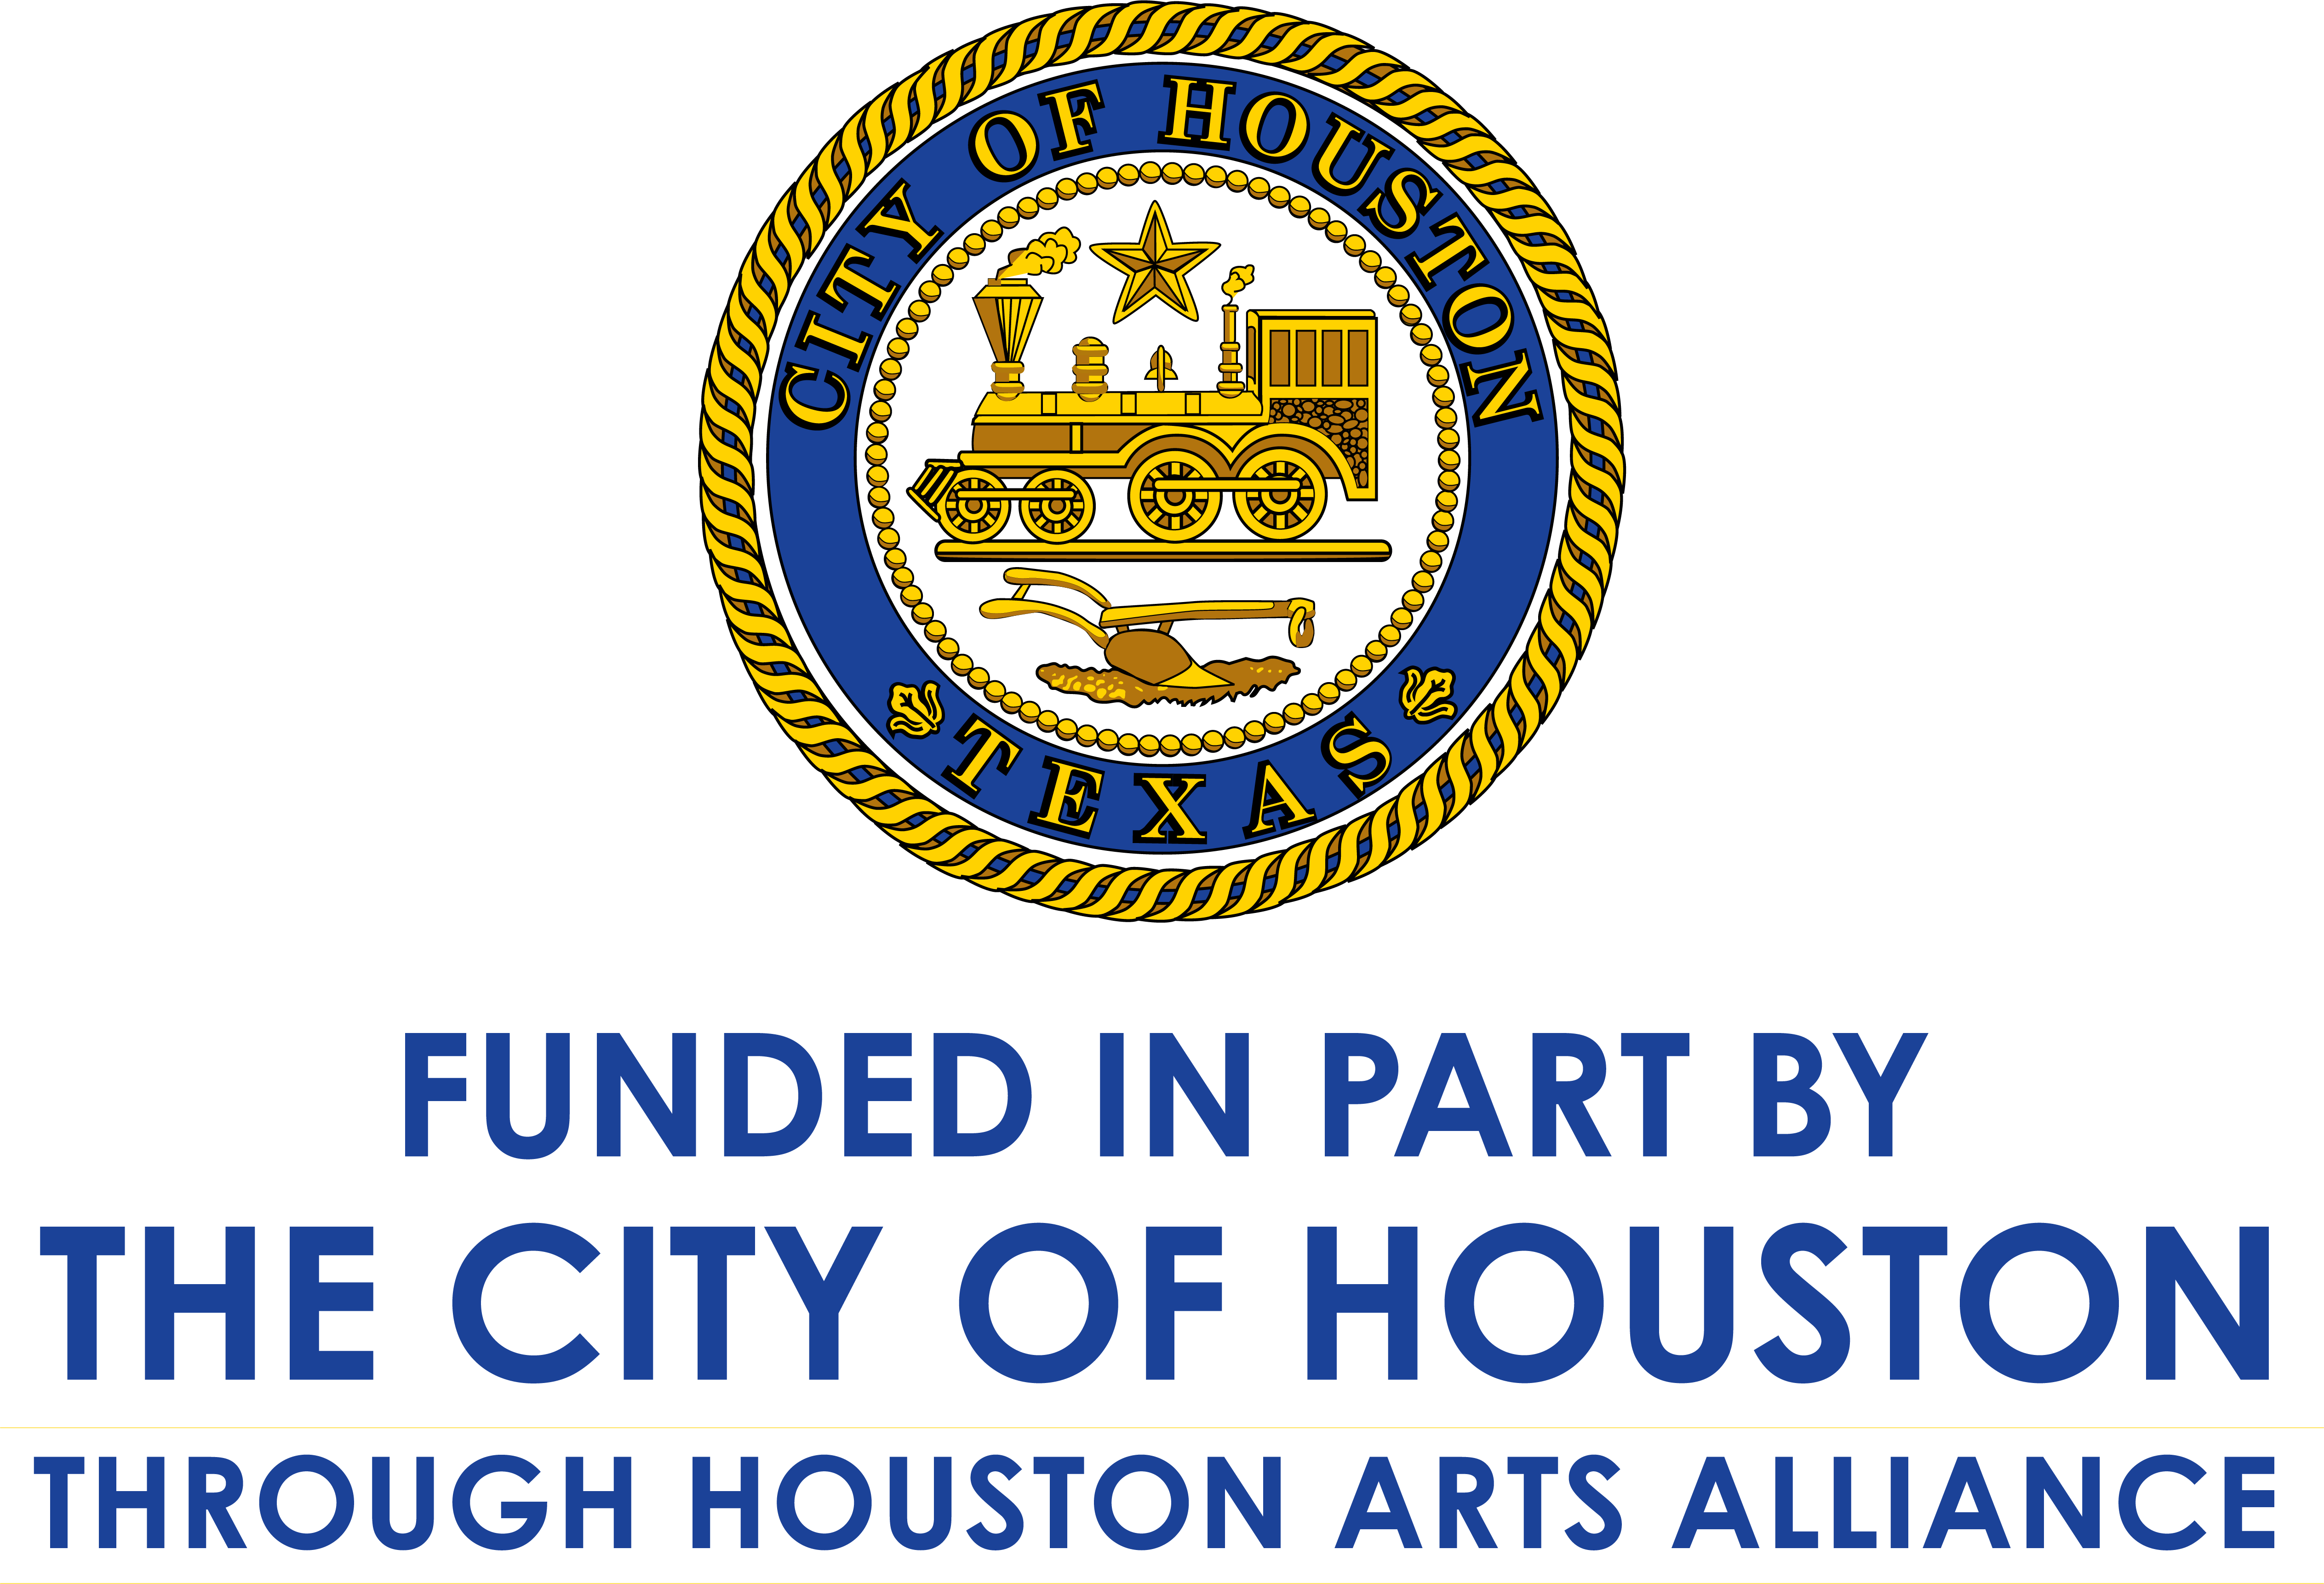 City of Houston through Houston Arts Alliance